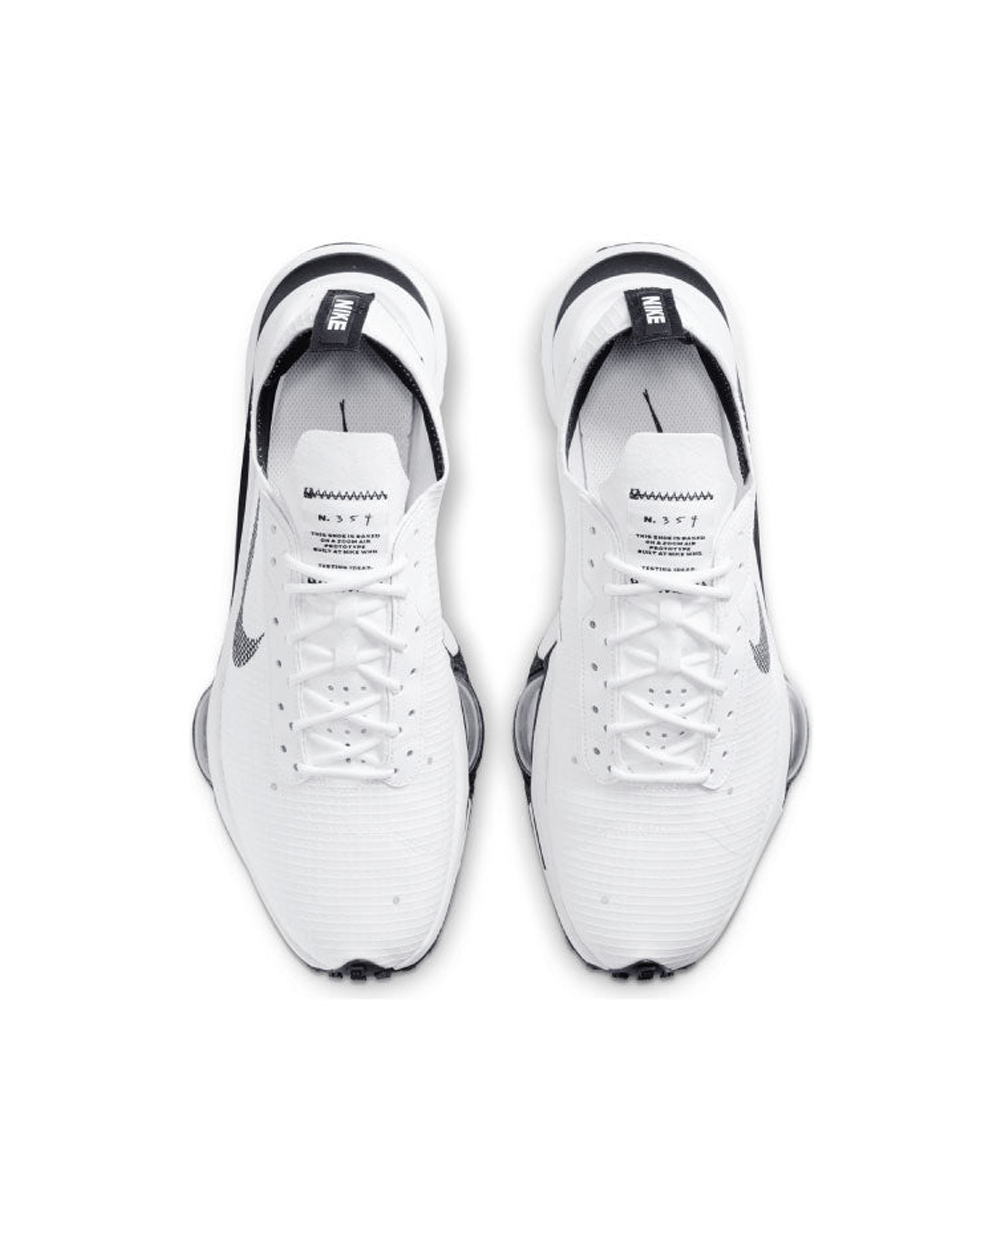 Nike Air Zoom Type Brancas e Pretas